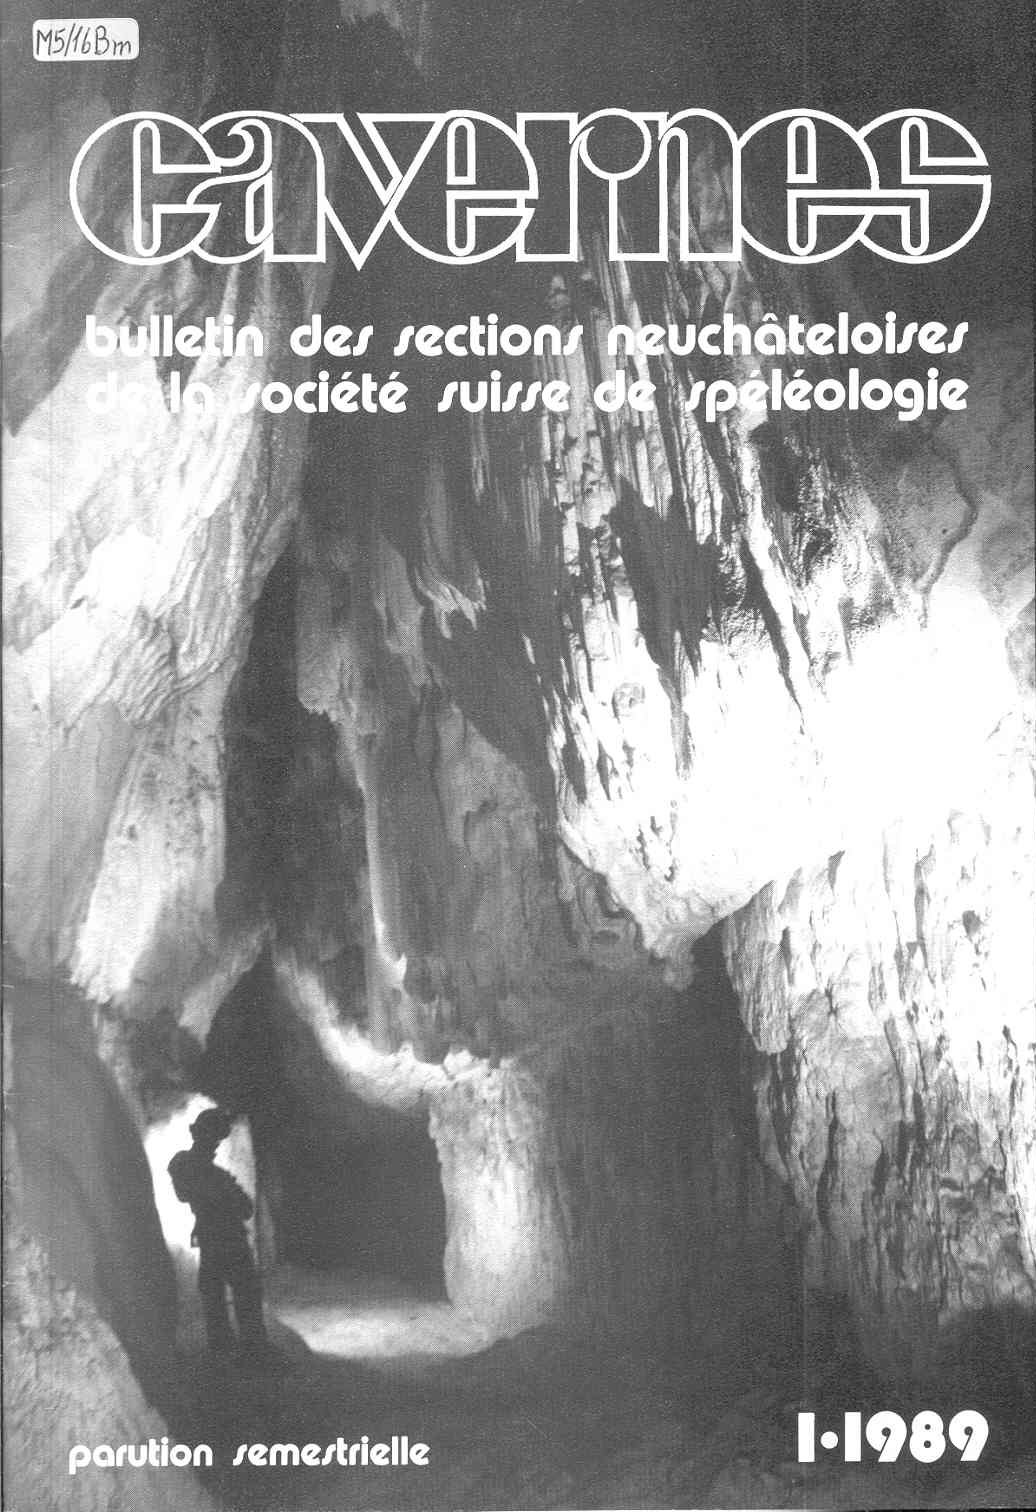 Cavernes/copertina anno 1989 n°1 e 2.jpg